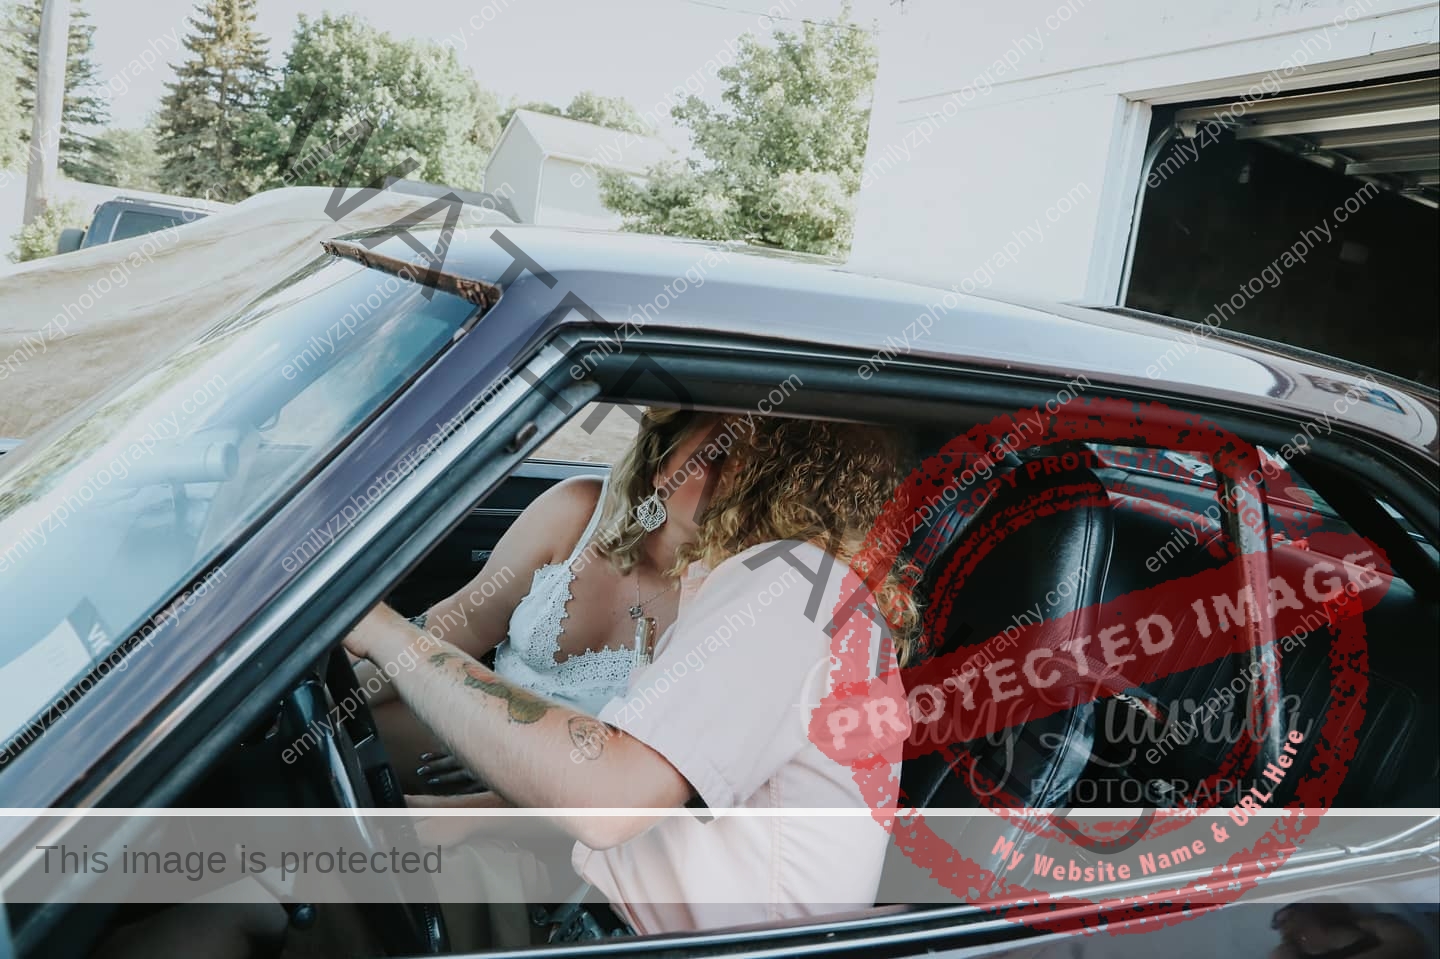 Send-offs in fancy cars got me like..    #TheFormentos #EmilyZuwalaPhotography #...